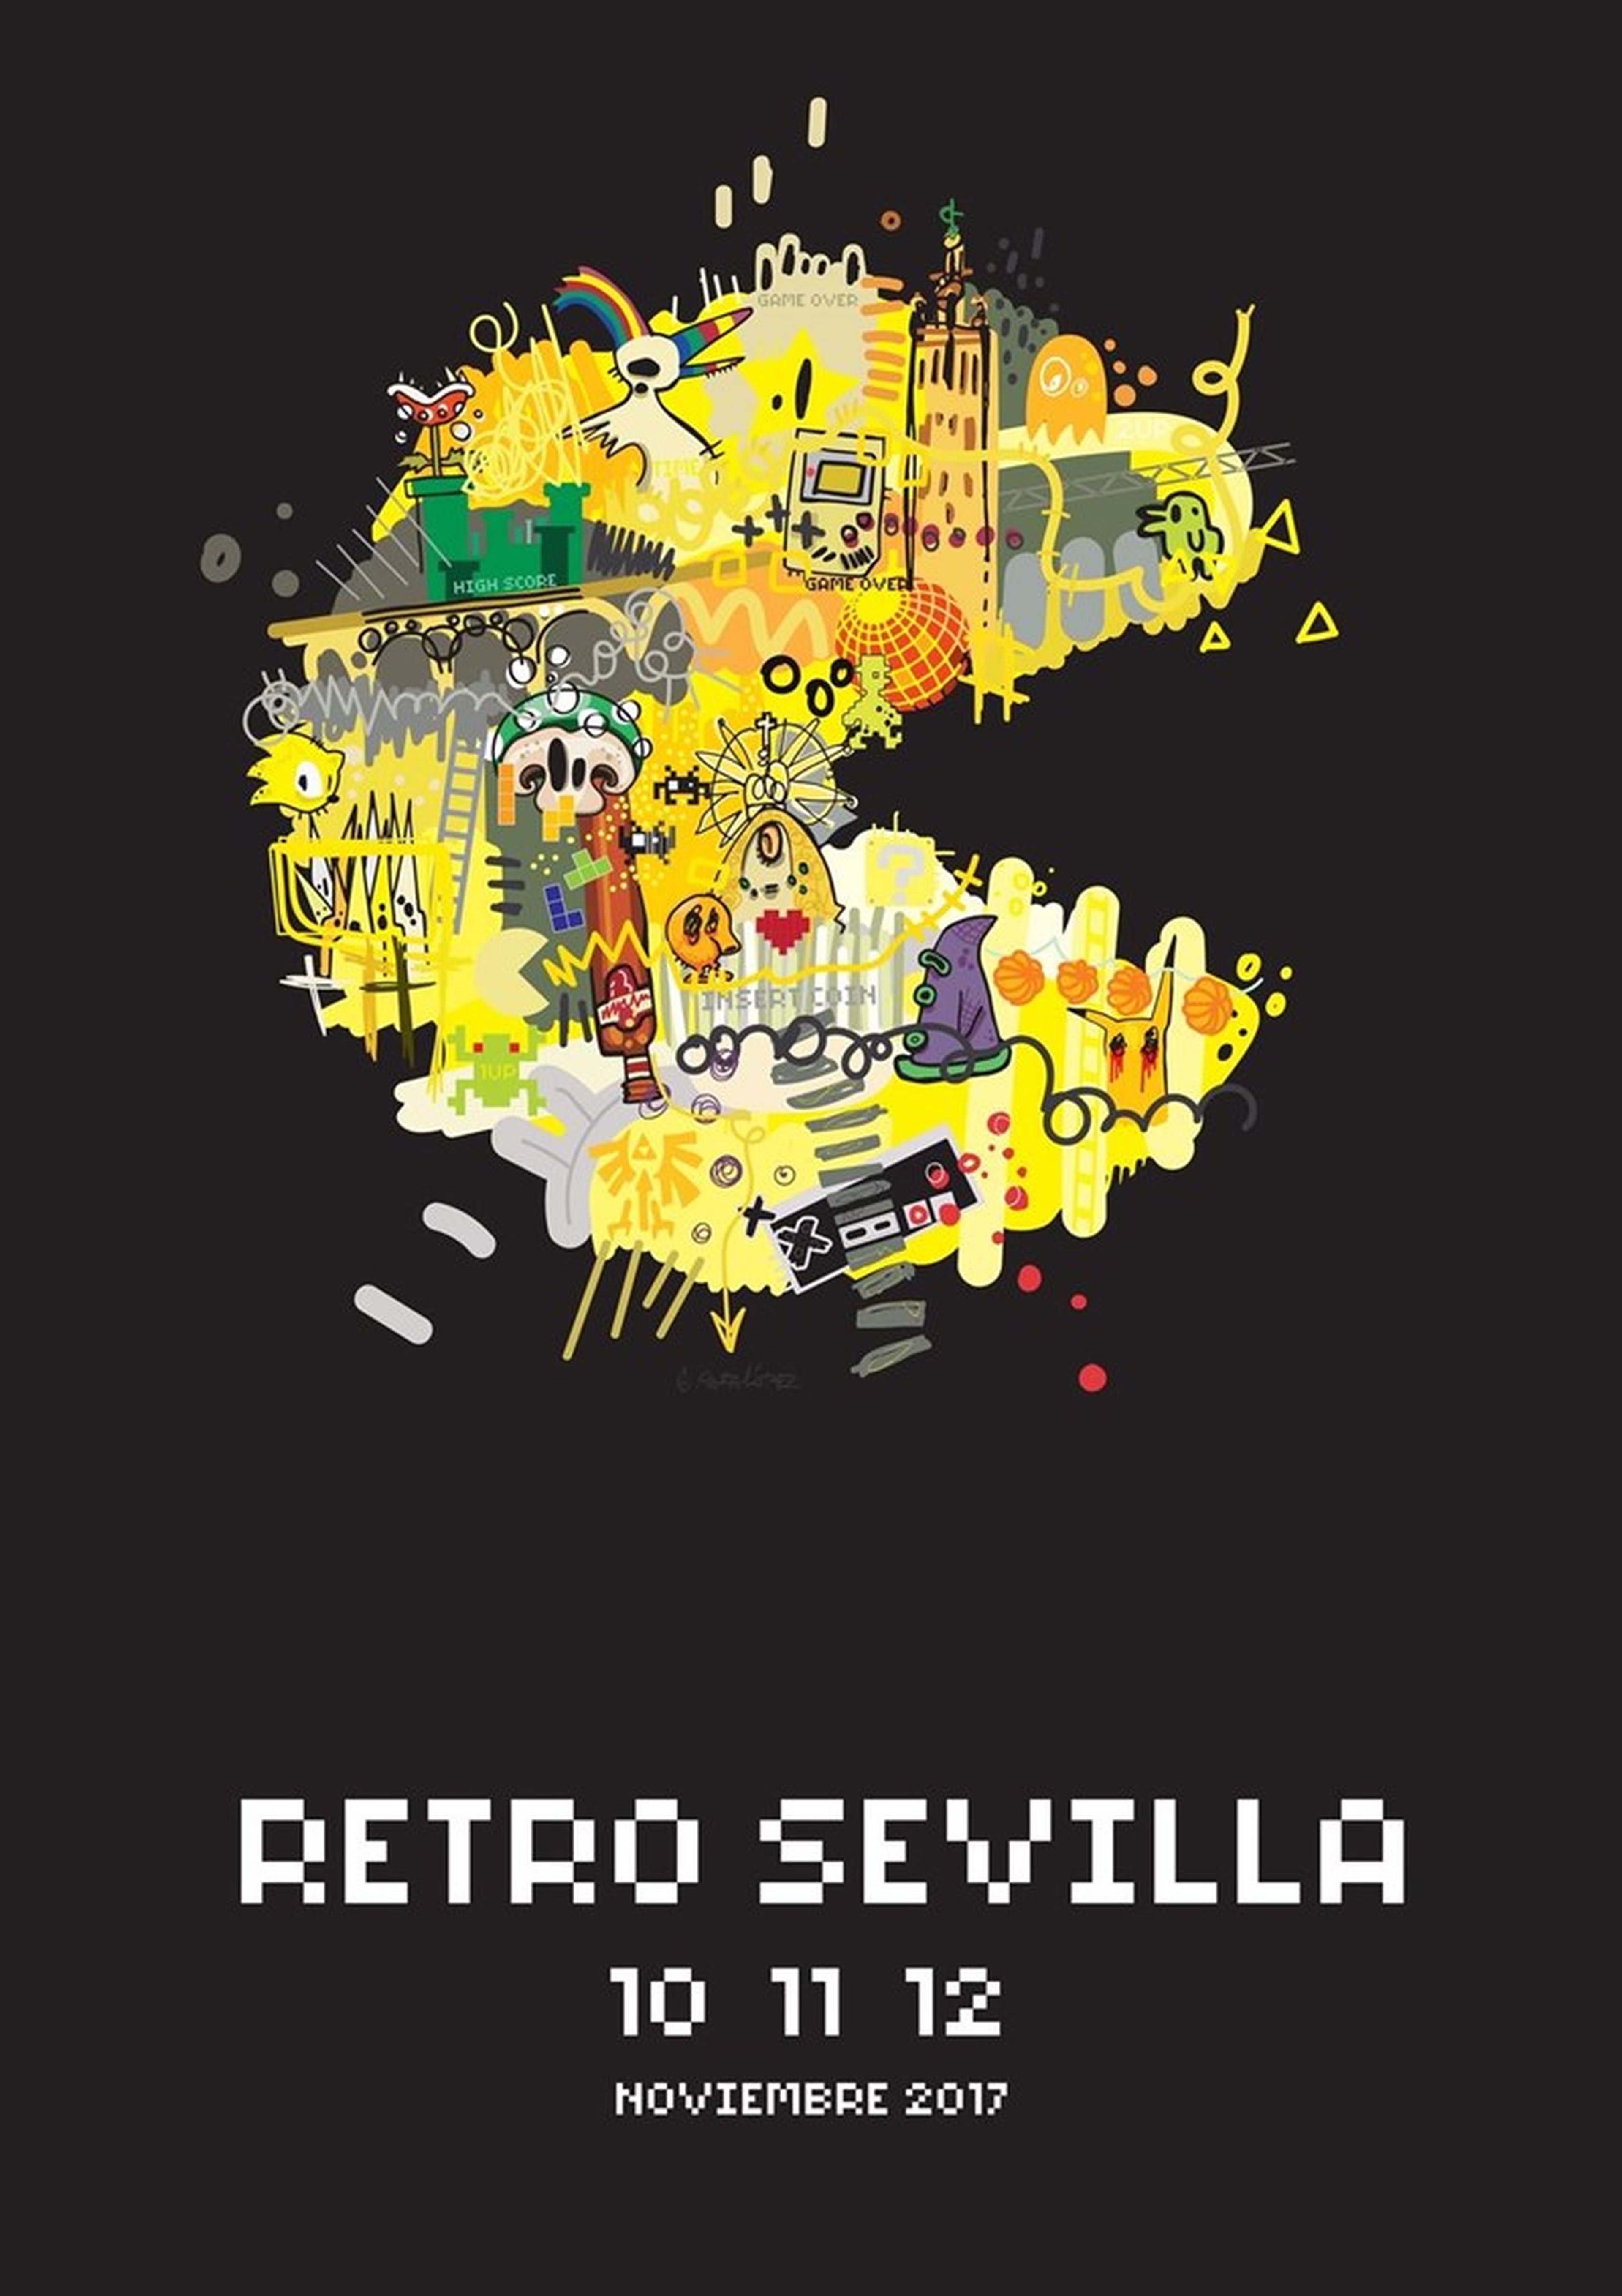 Retro Sevilla 2017